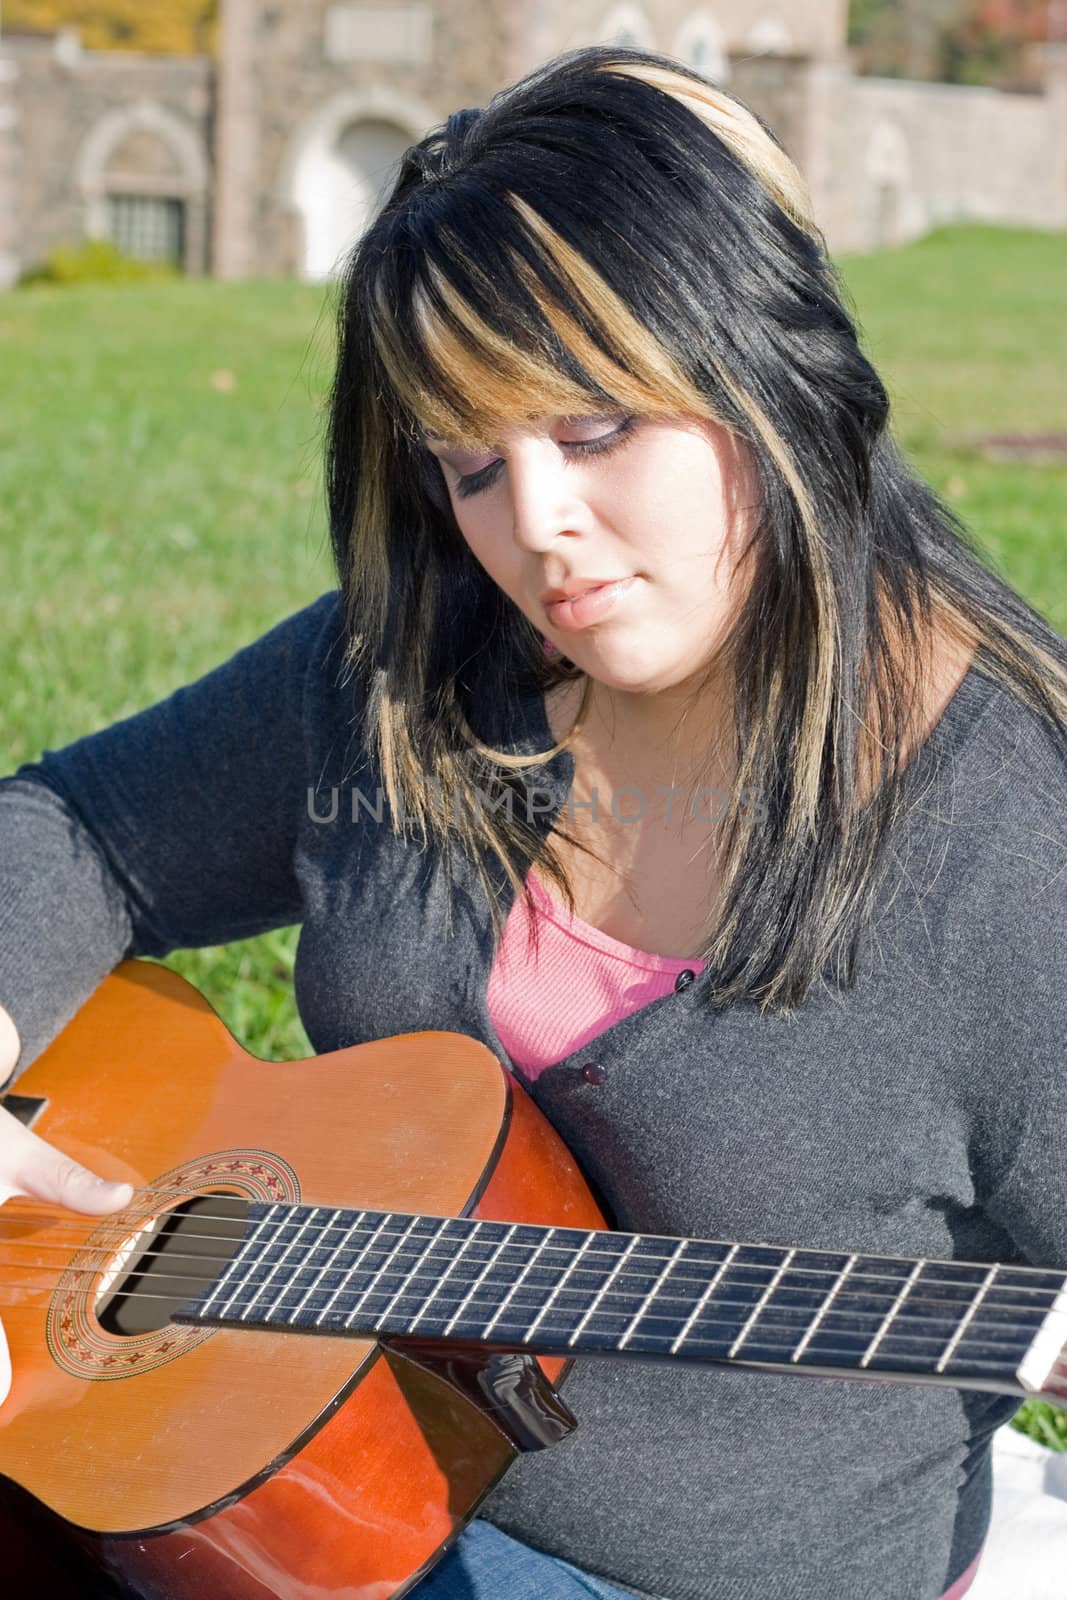 A young hispanic woman playing a guitar outdoors.